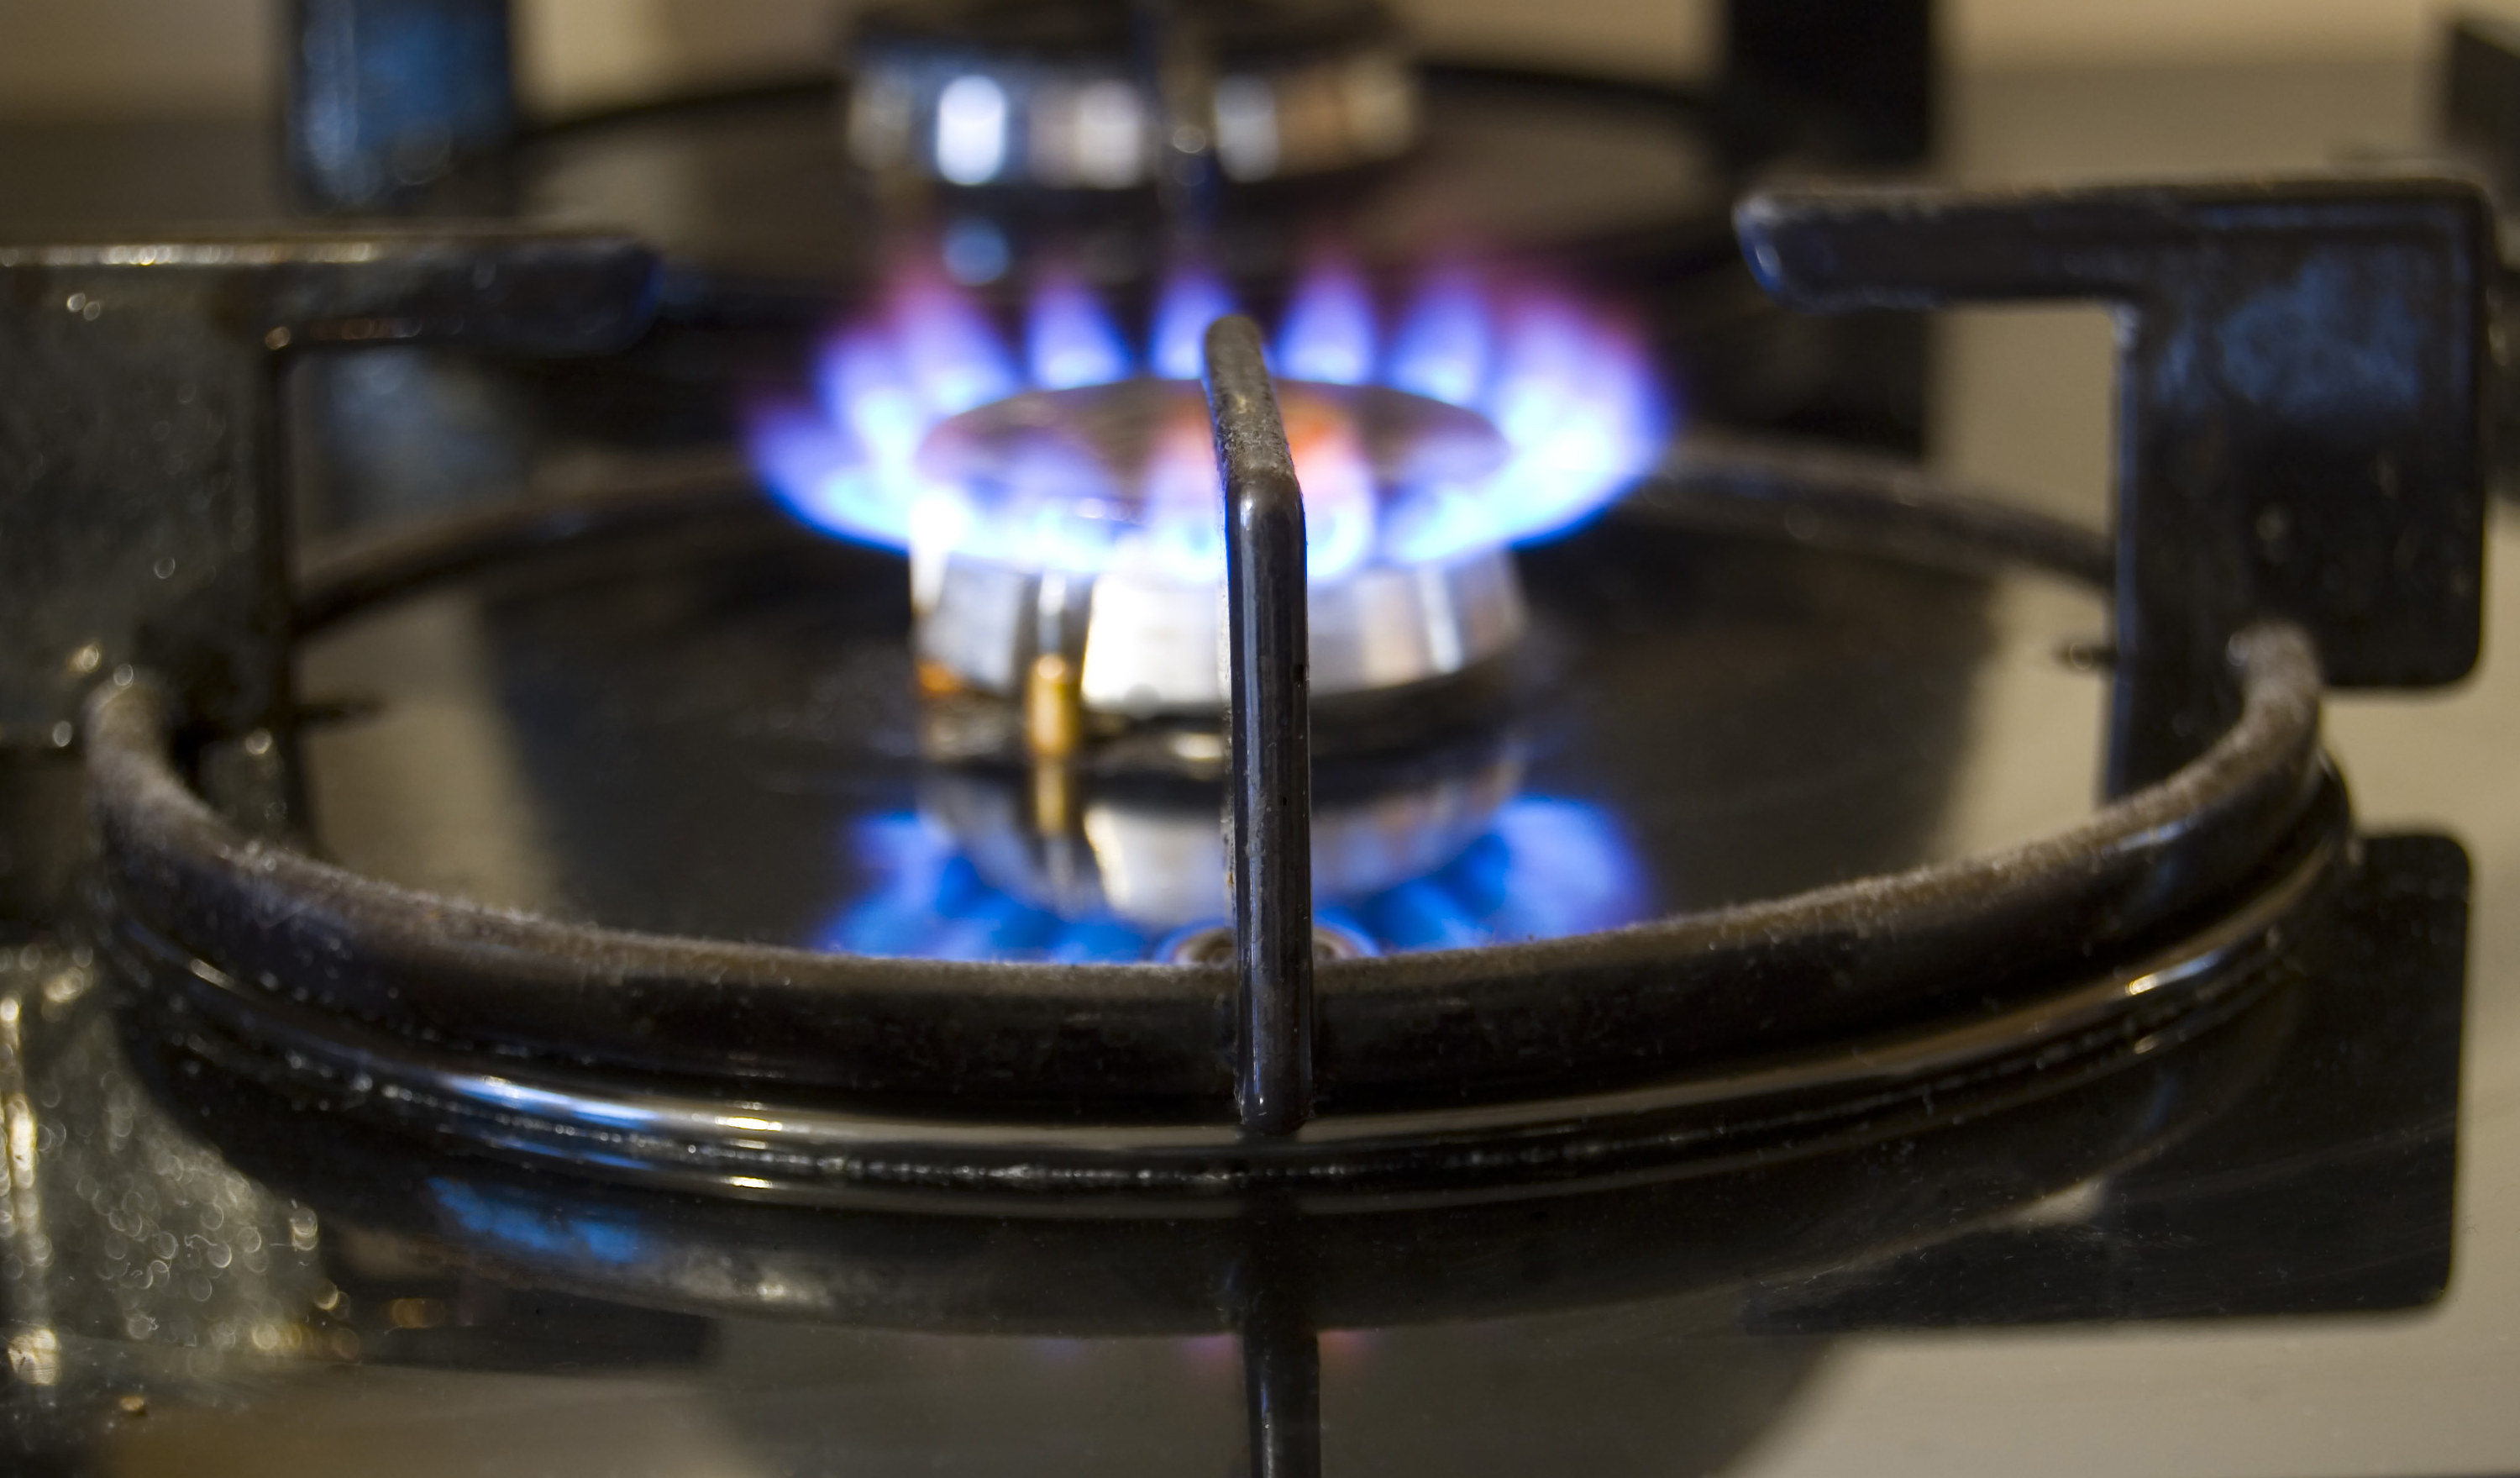 A gas stove burner